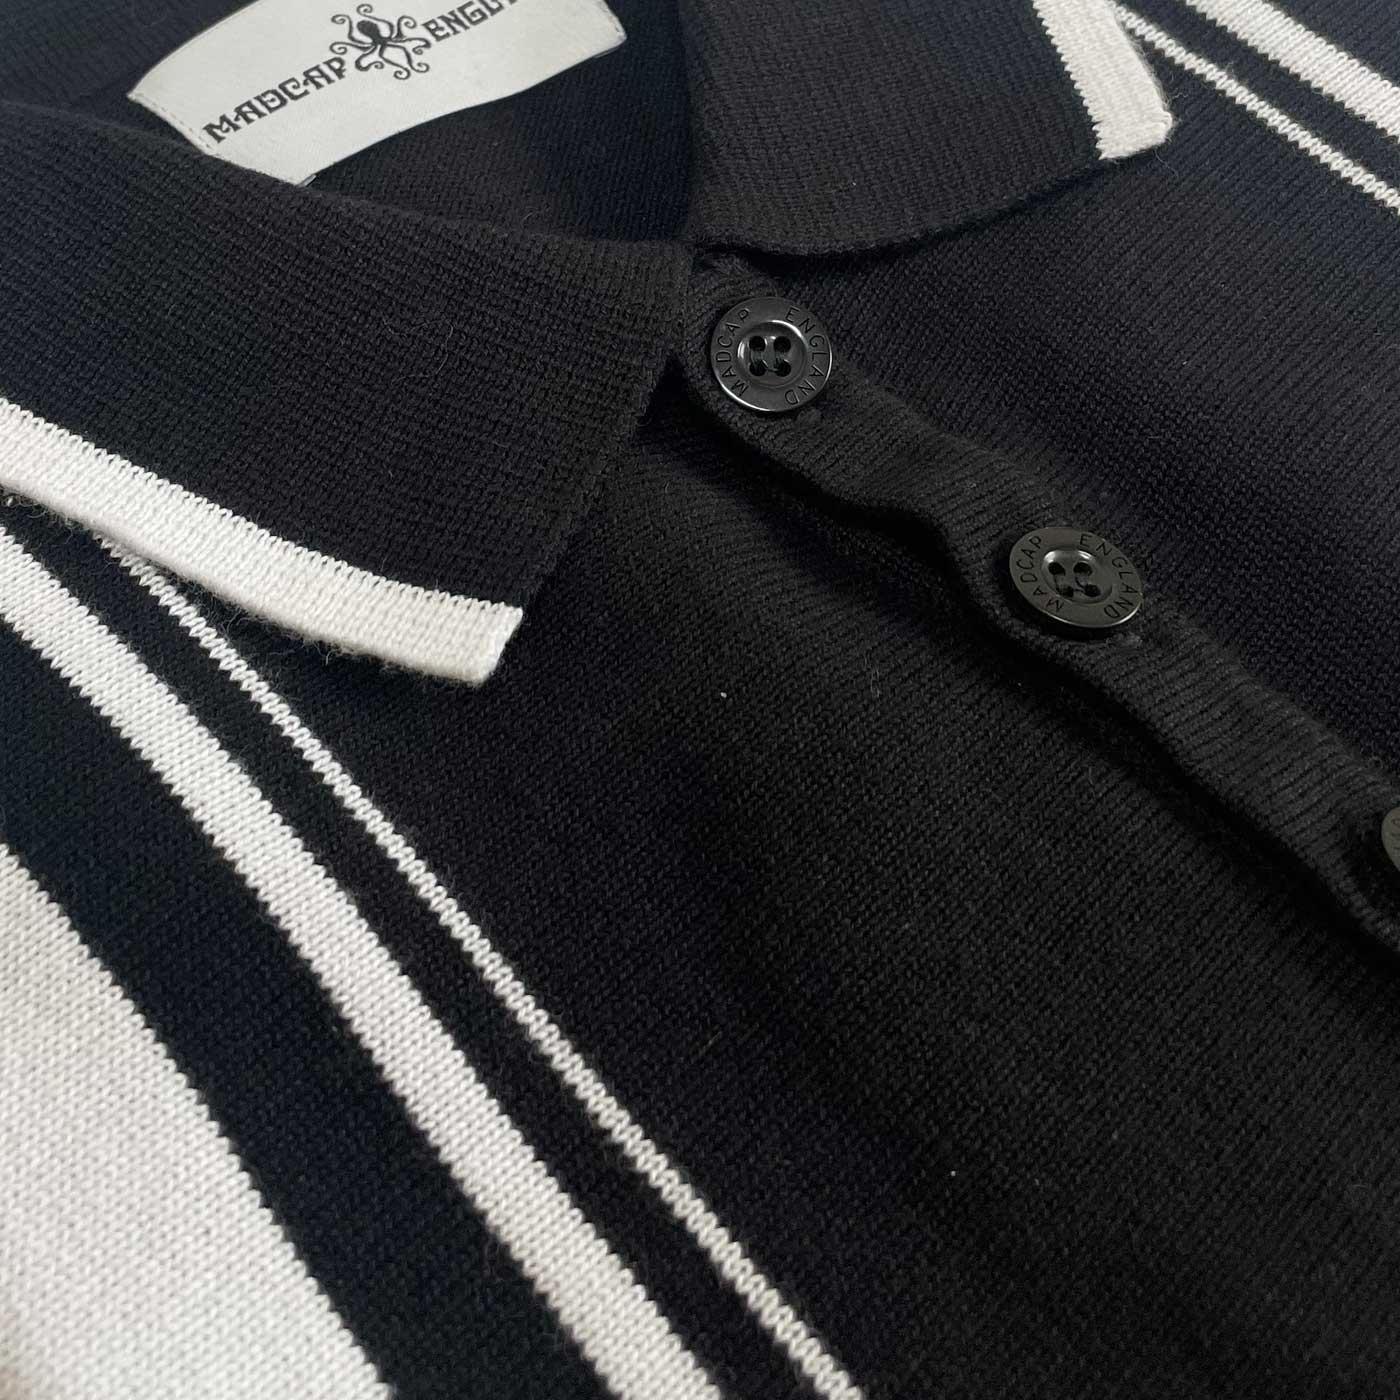 MADCAP ENGLAND Aftermath Retro 60s Mod Knitted Stripe Polo Black